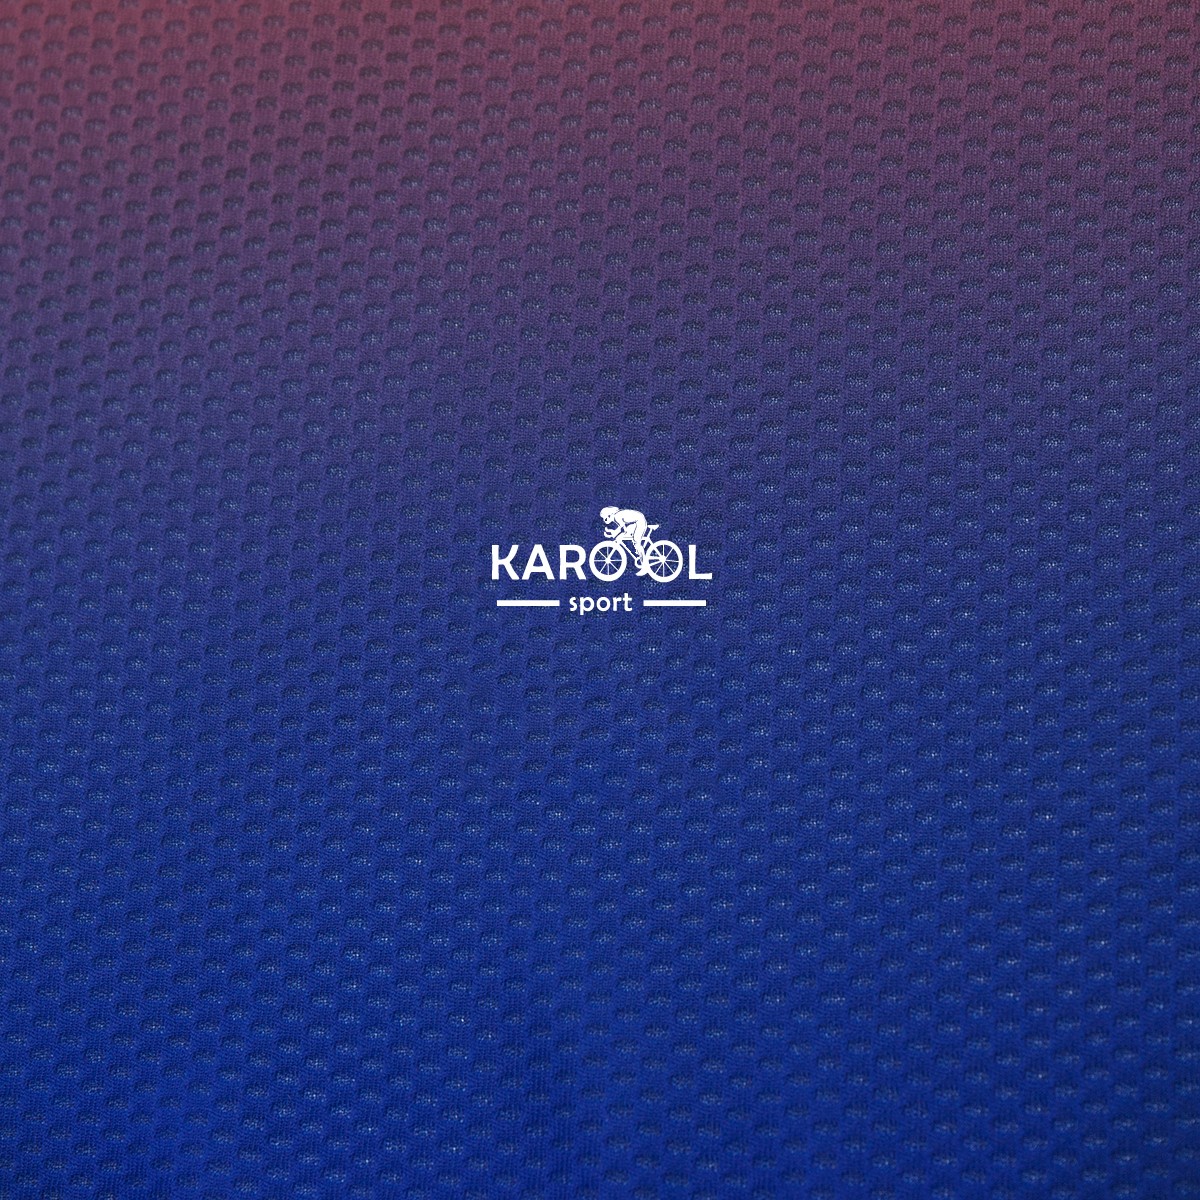 Karool comfortable running apparel supplier for children-7